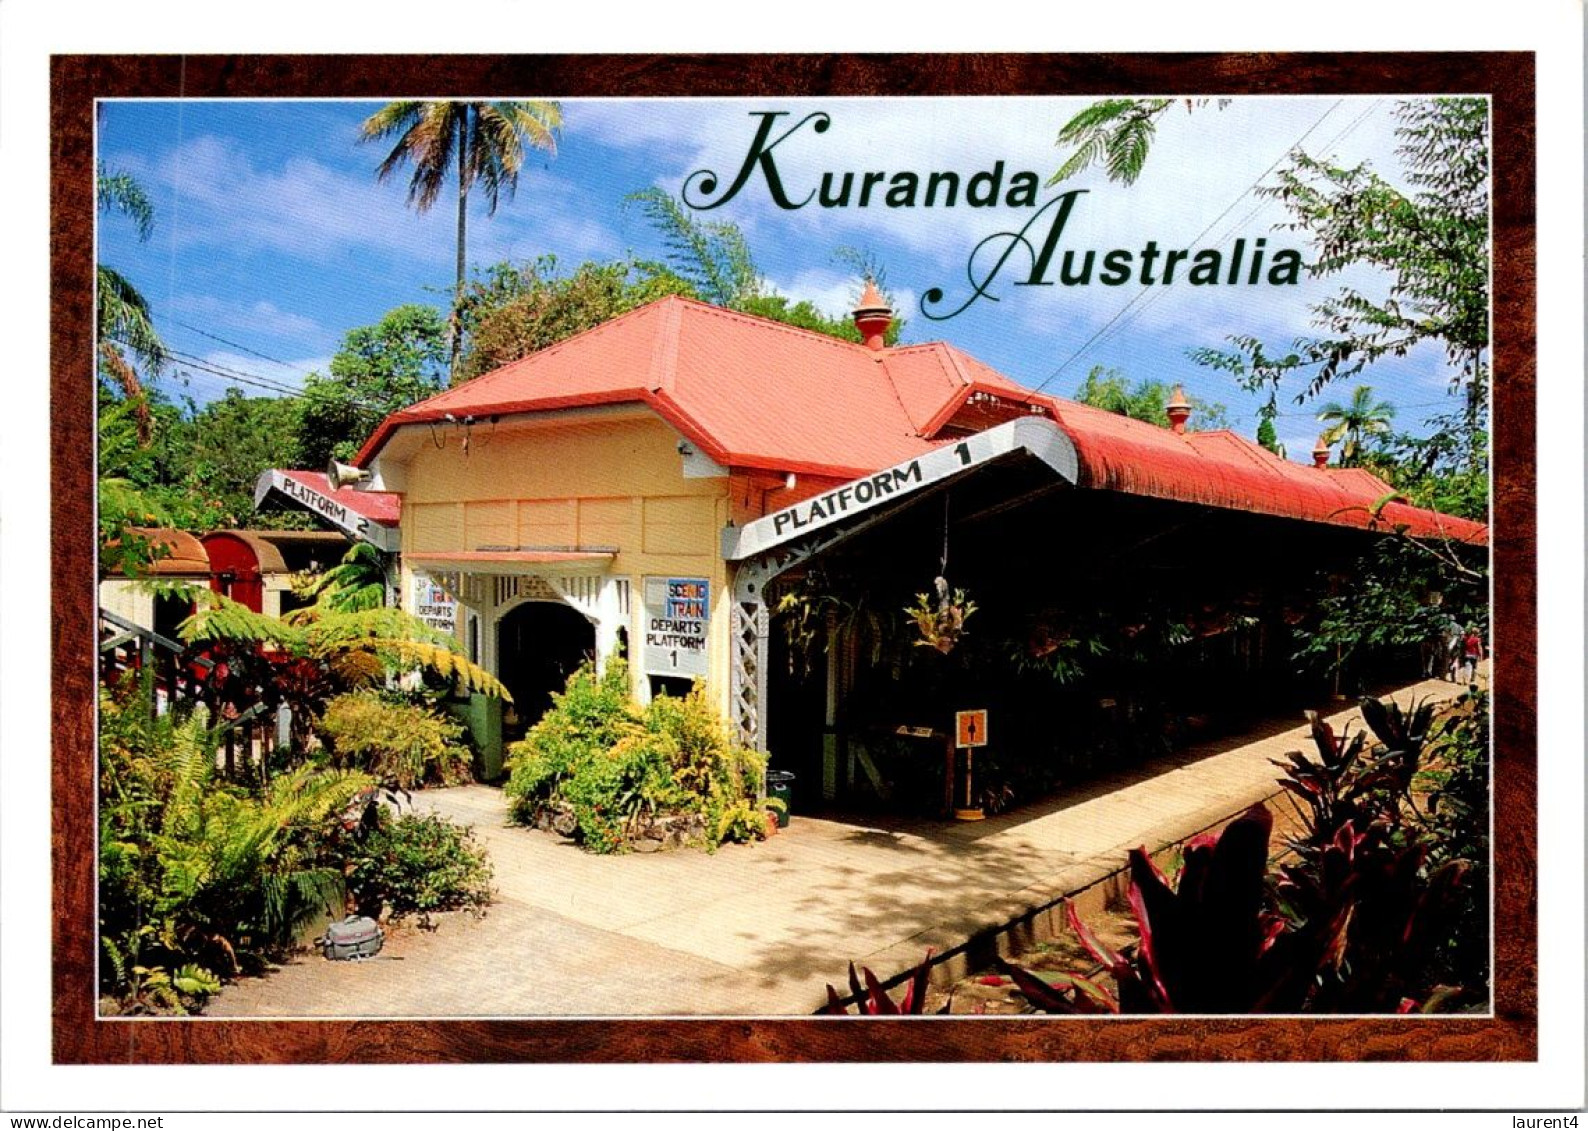 19-5-2024 (5 Z 31) Australia - Cairns Kuranda Scenic Railway (train) 2 Postcards - Treinen